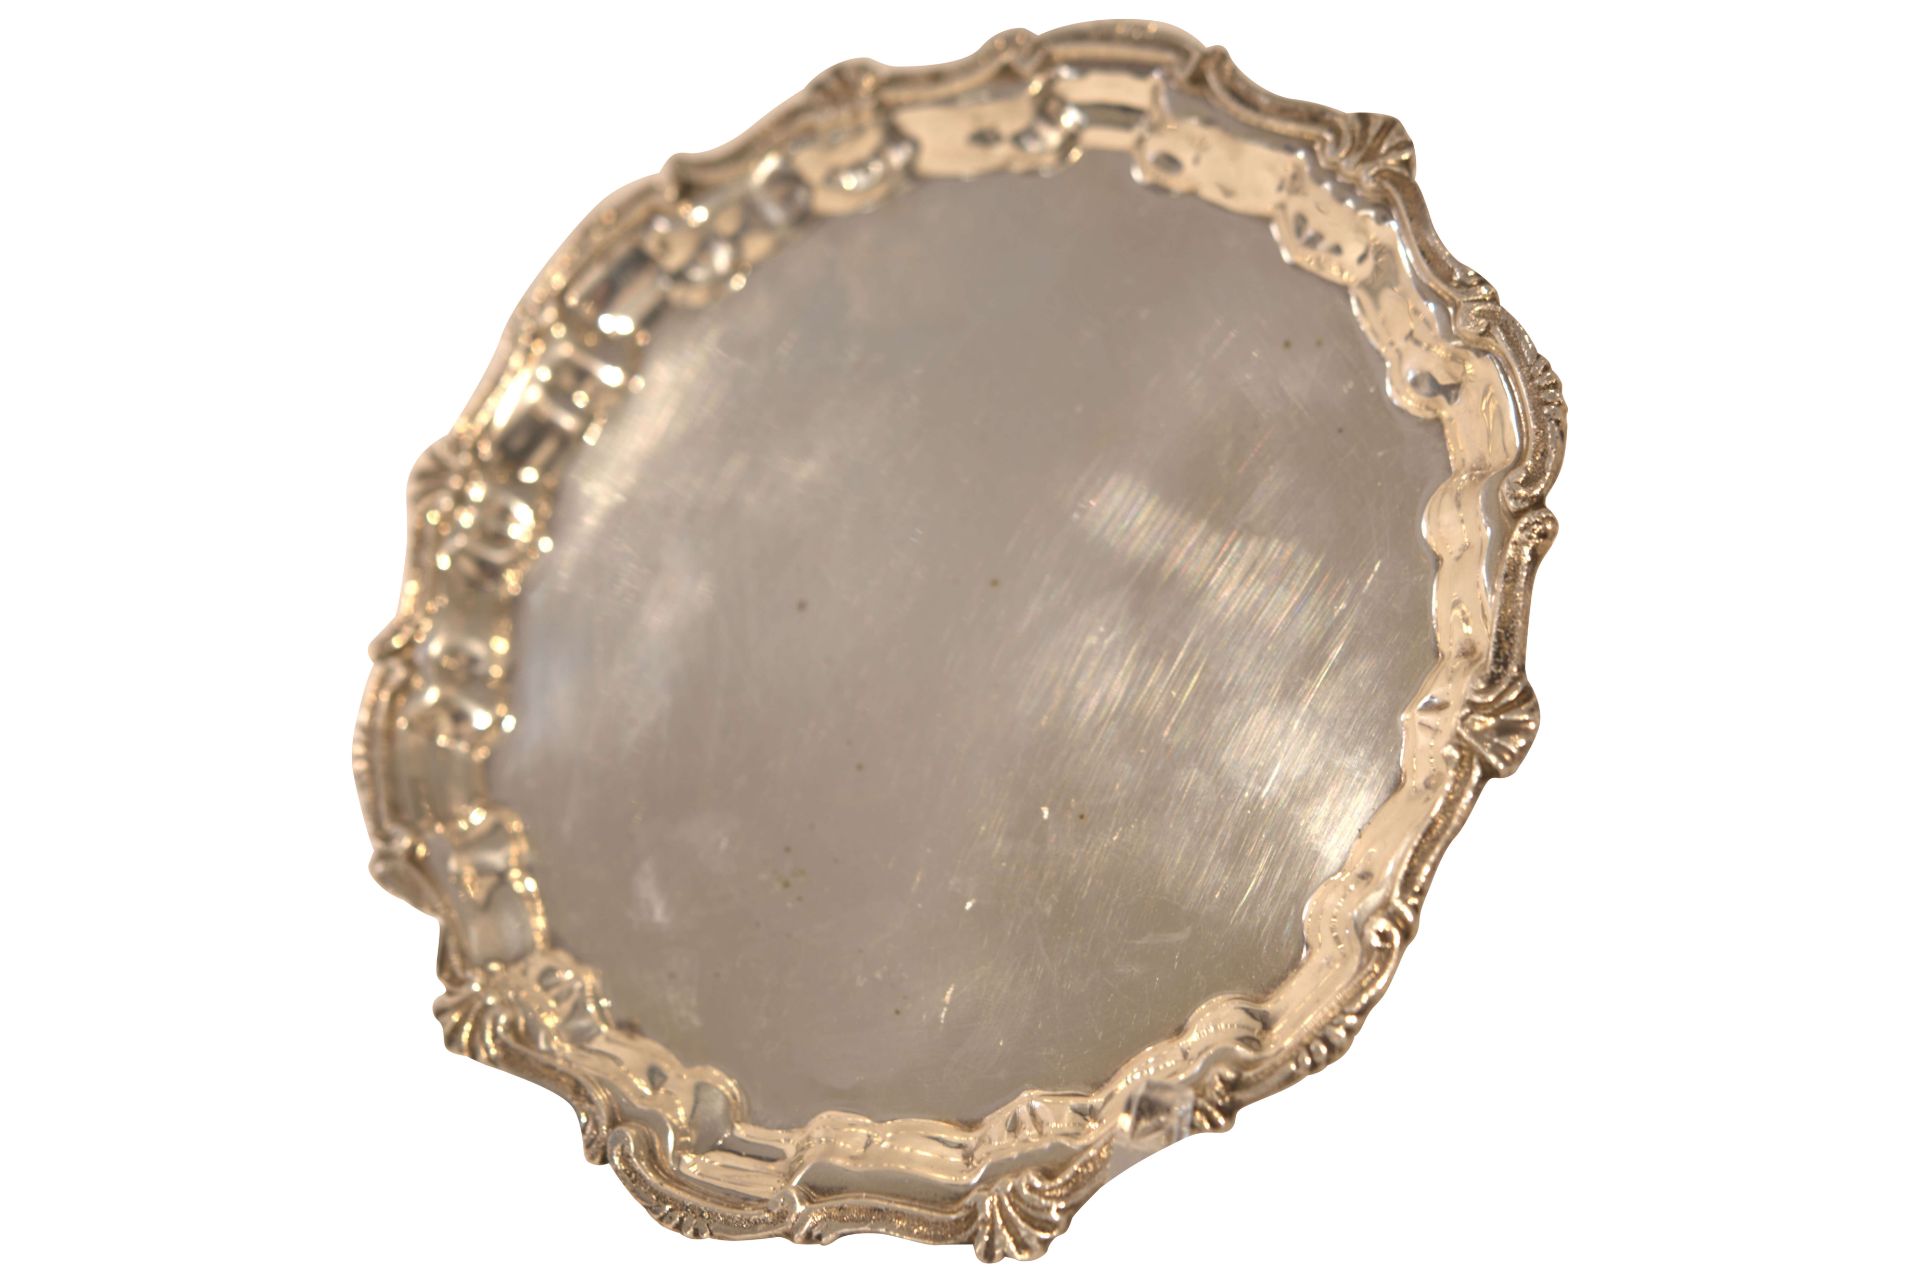 Silber Teller mit Ornament | Silver Plate with Ornament - Bild 4 aus 5